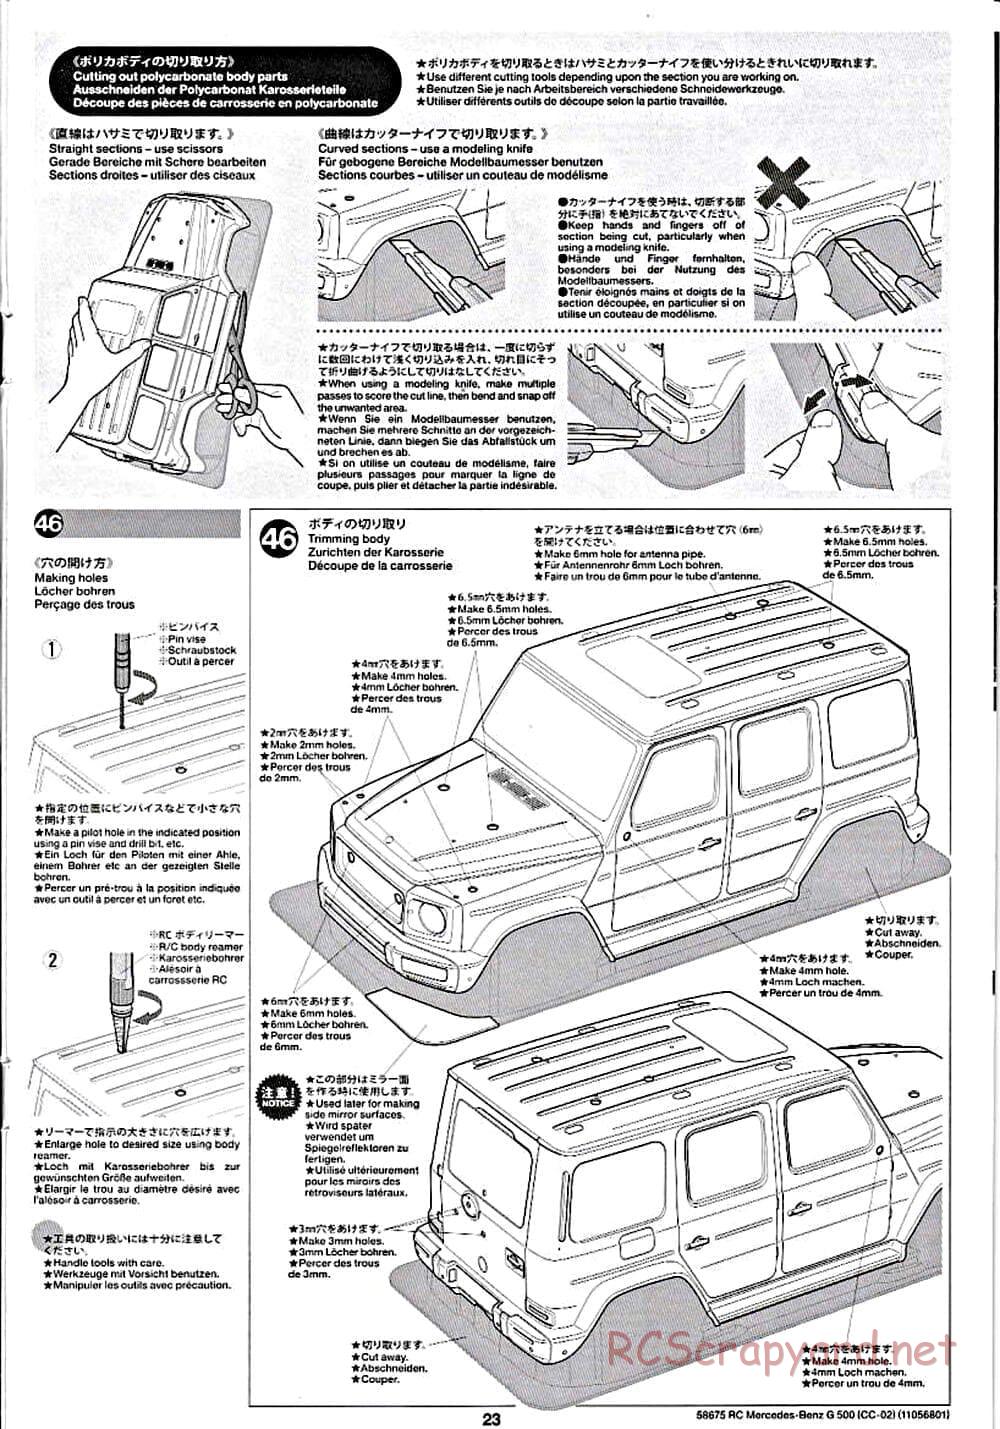 Tamiya - Mercedes-Benz G500 - CC-02 Chassis - Manual - Page 23